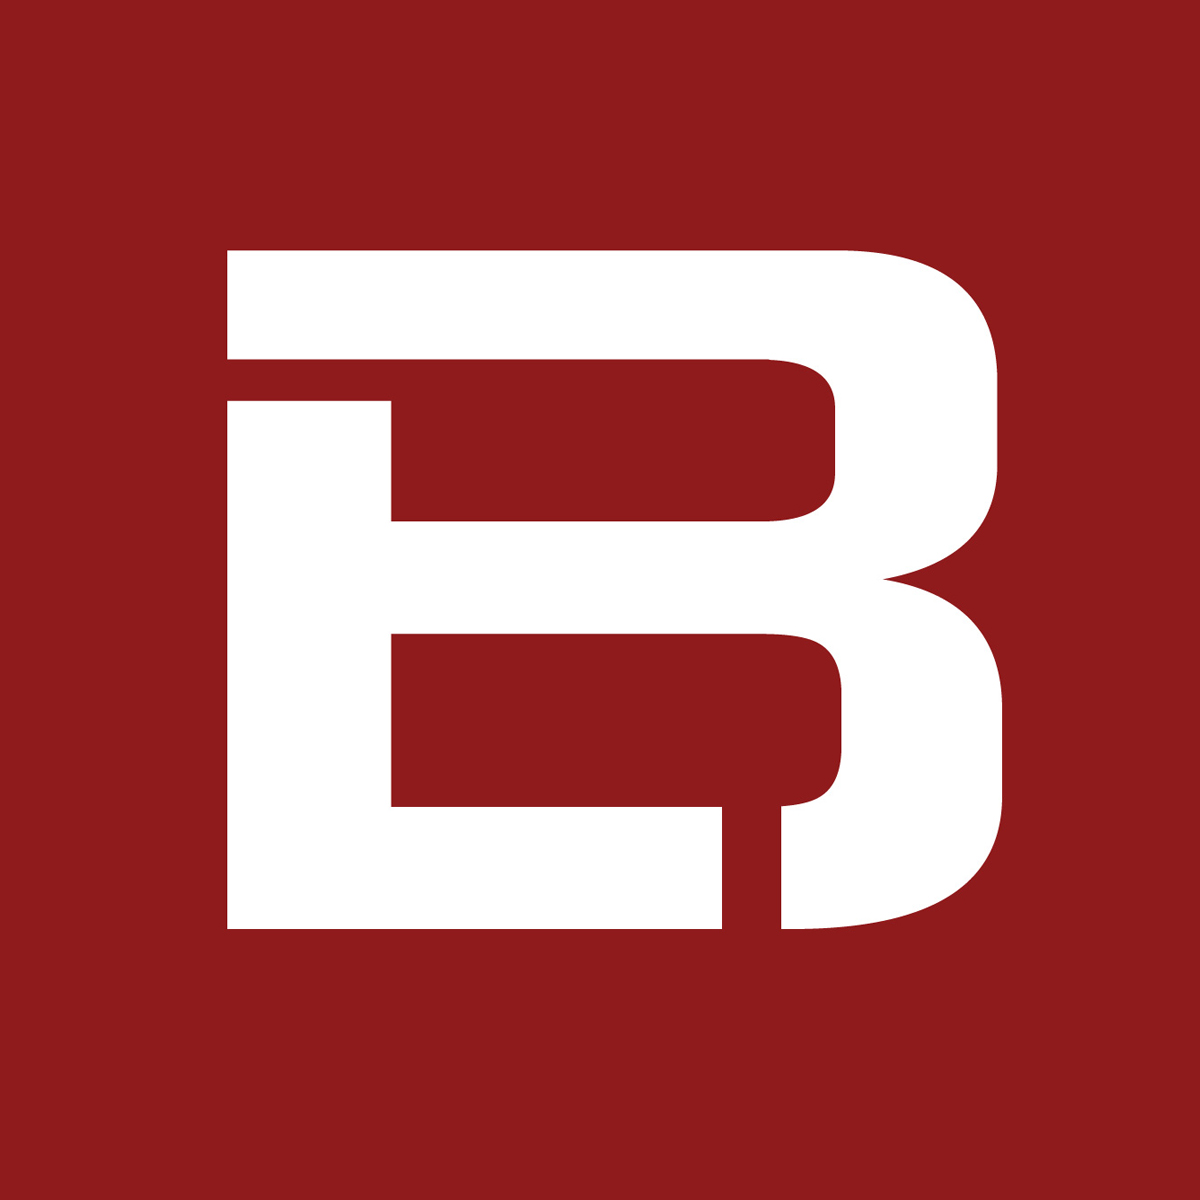 brunswick letip logo identity